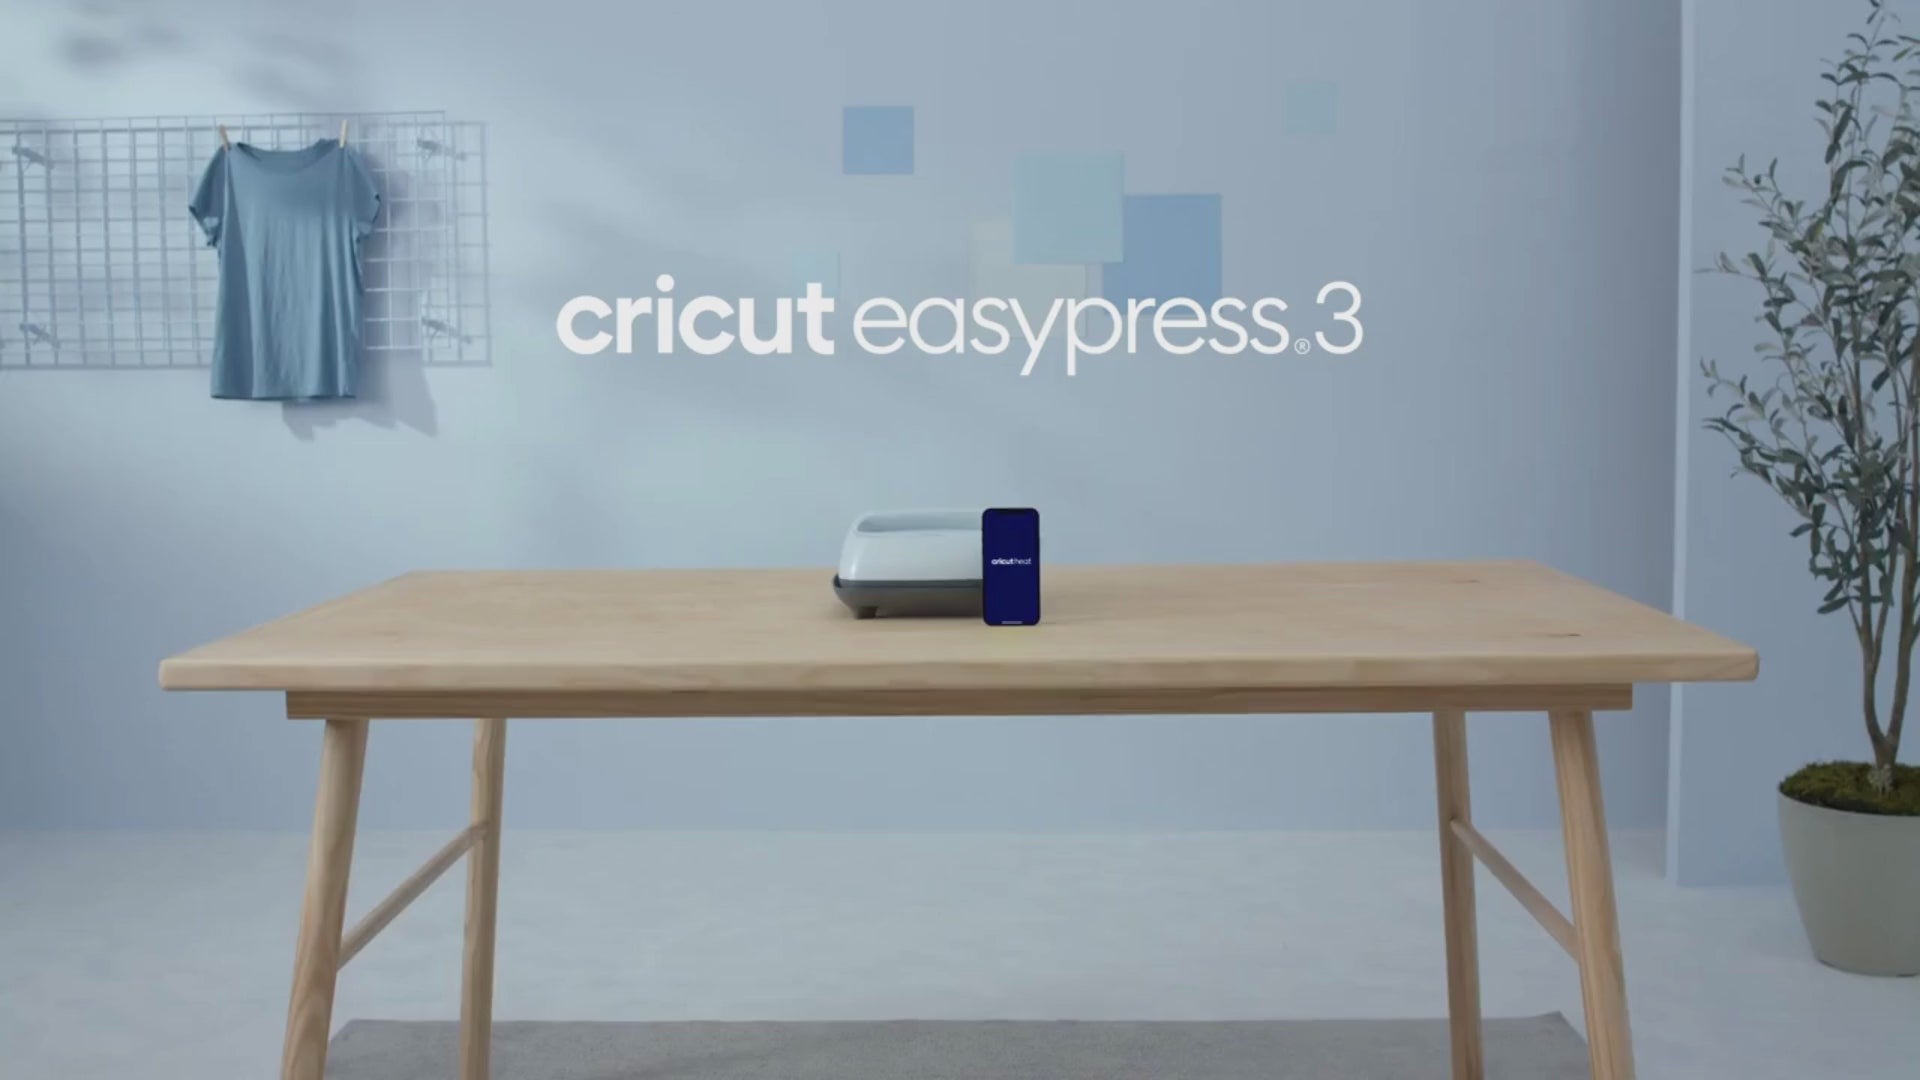 Cricut EasyPress Mat – RQC Supply Ltd